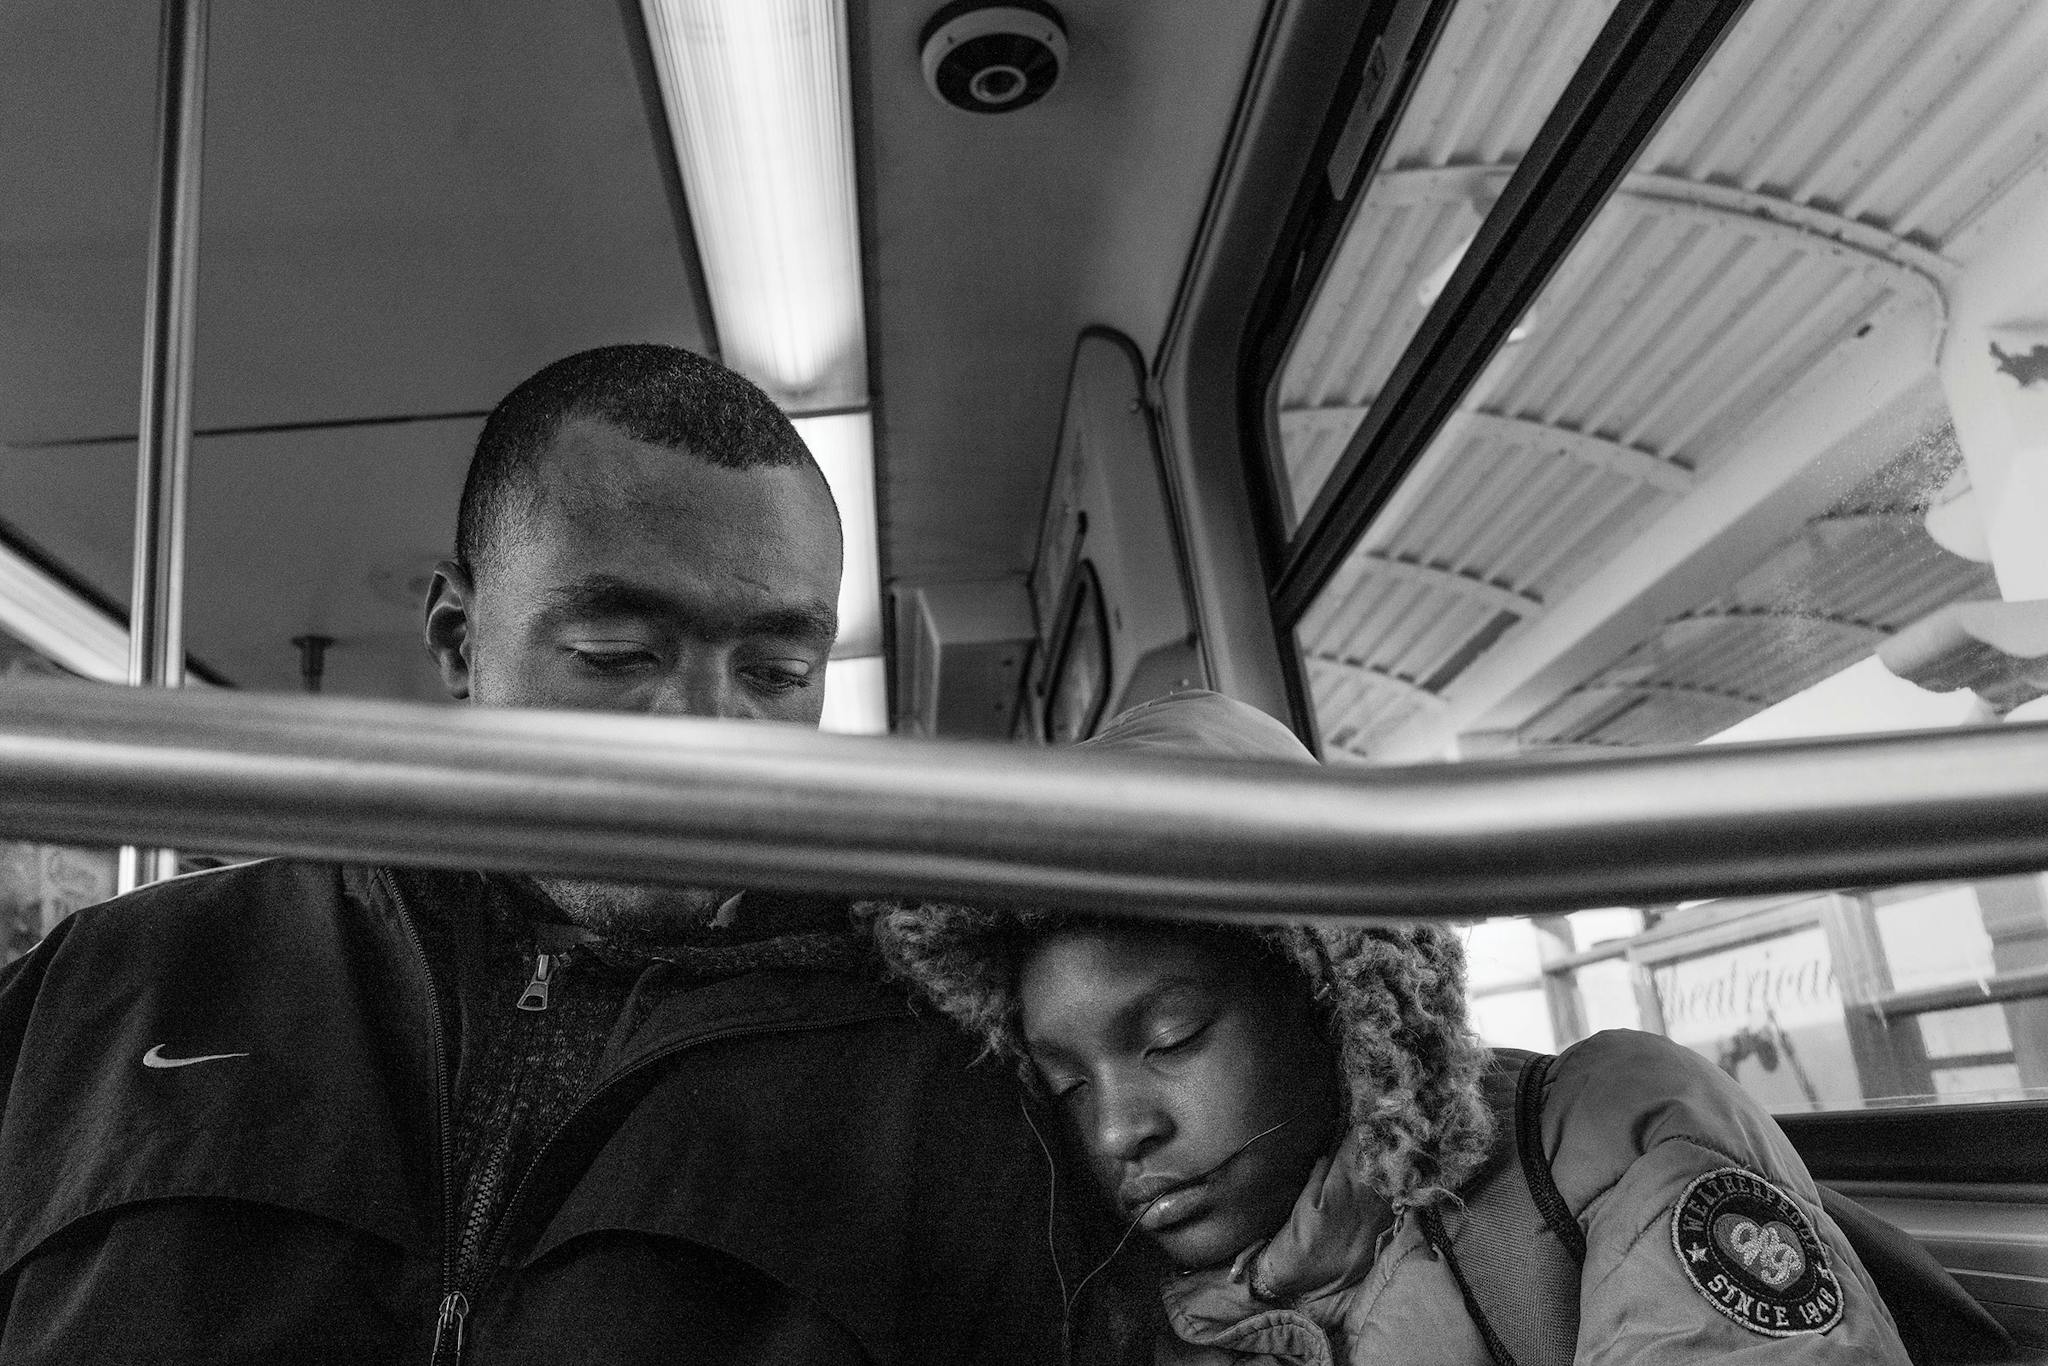 Twelve-year-old Devaiyah Buckner sleeps on her father Patrick’s shoulder on the train ride back from school.